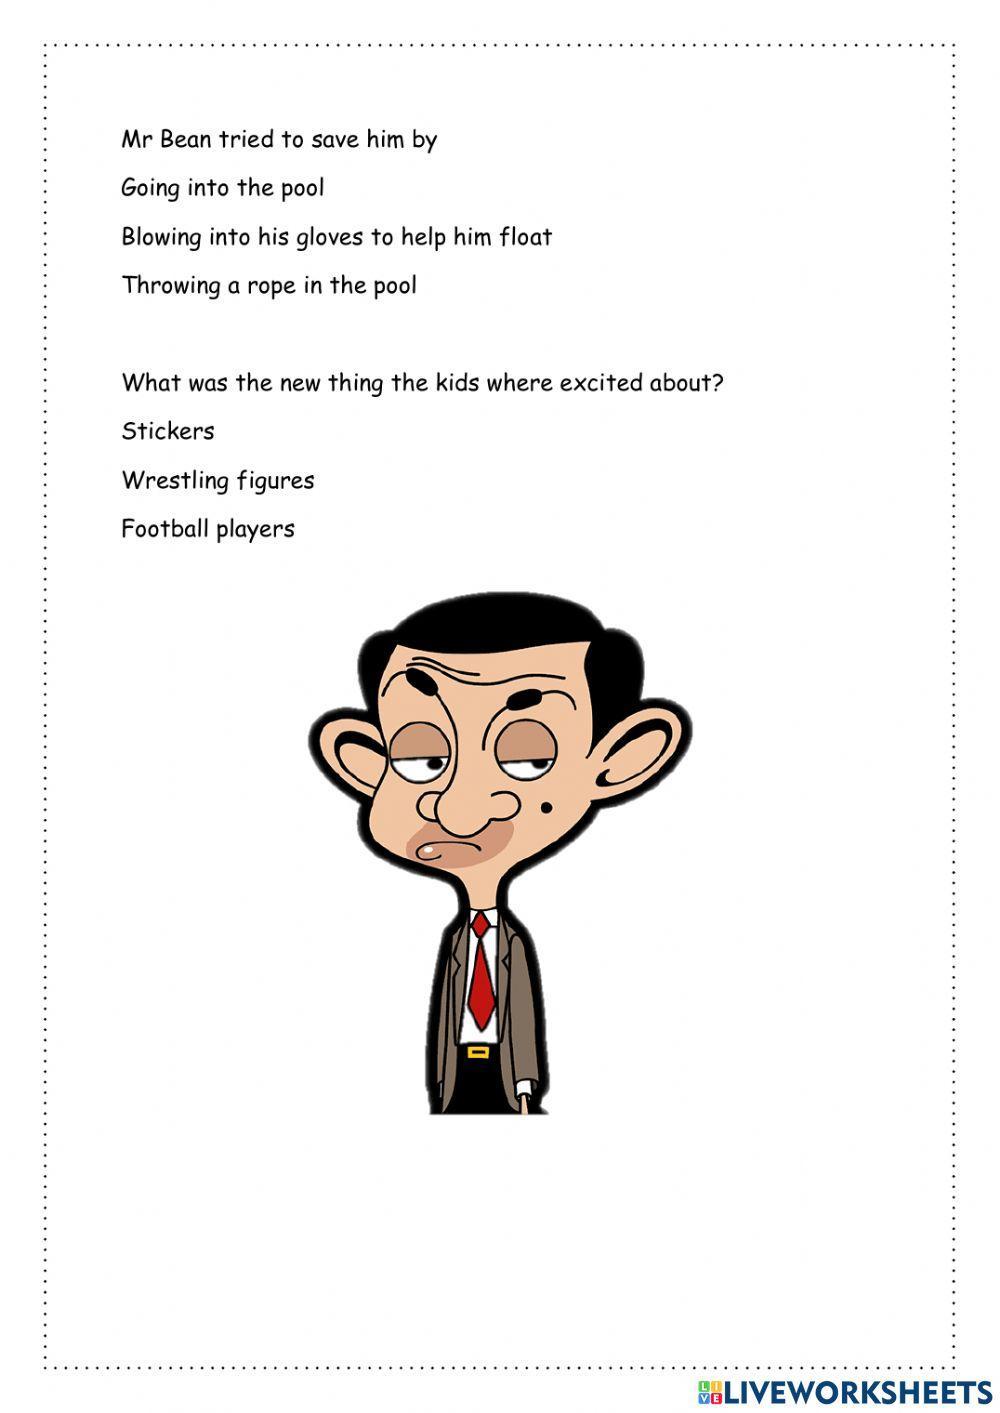 Mr.Bean Video Comprehension